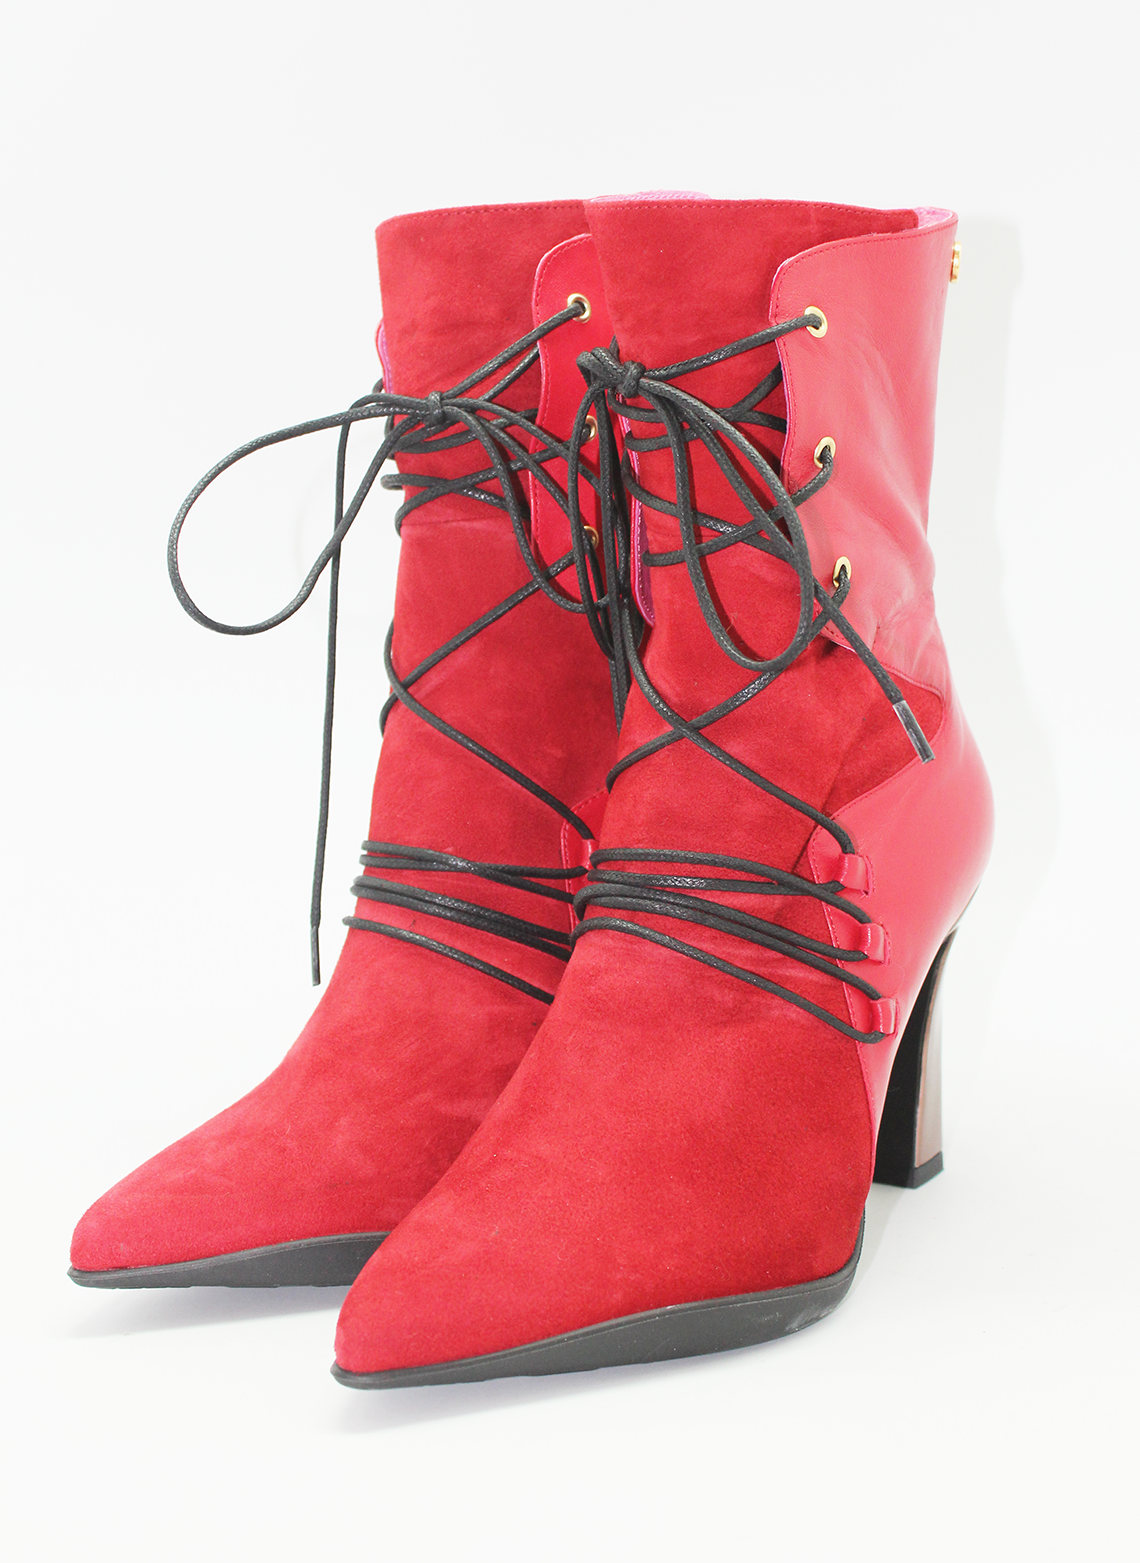 Mina - Red/black ankle heel boot